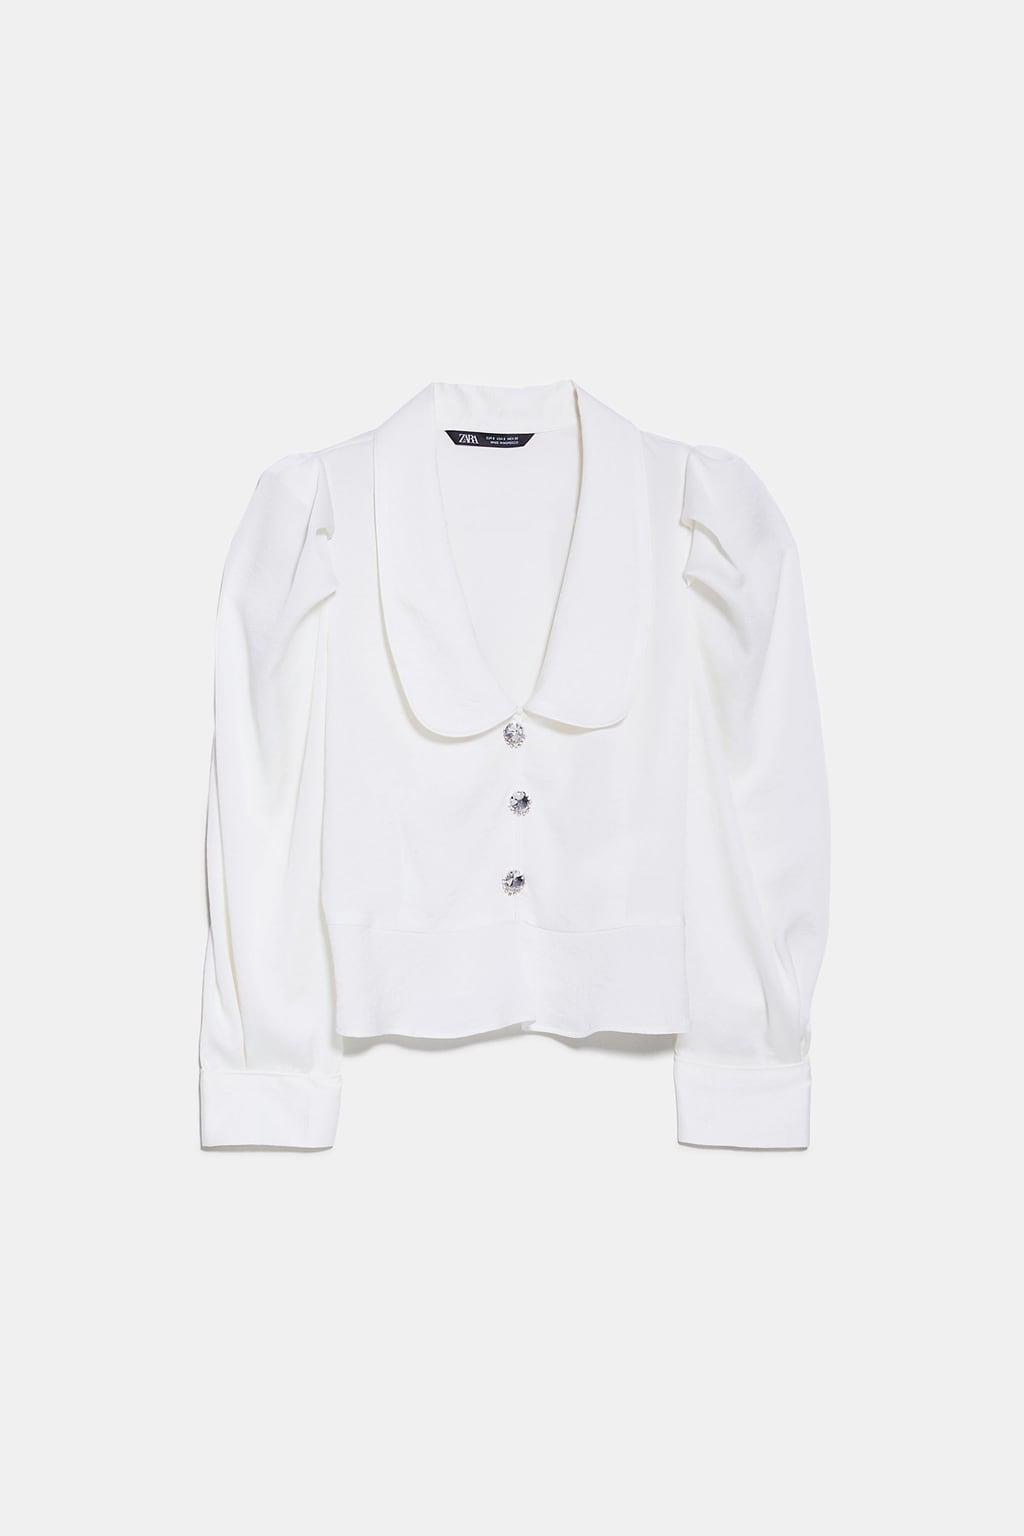 Blusa de Zara. Blusa blanca con botones joya